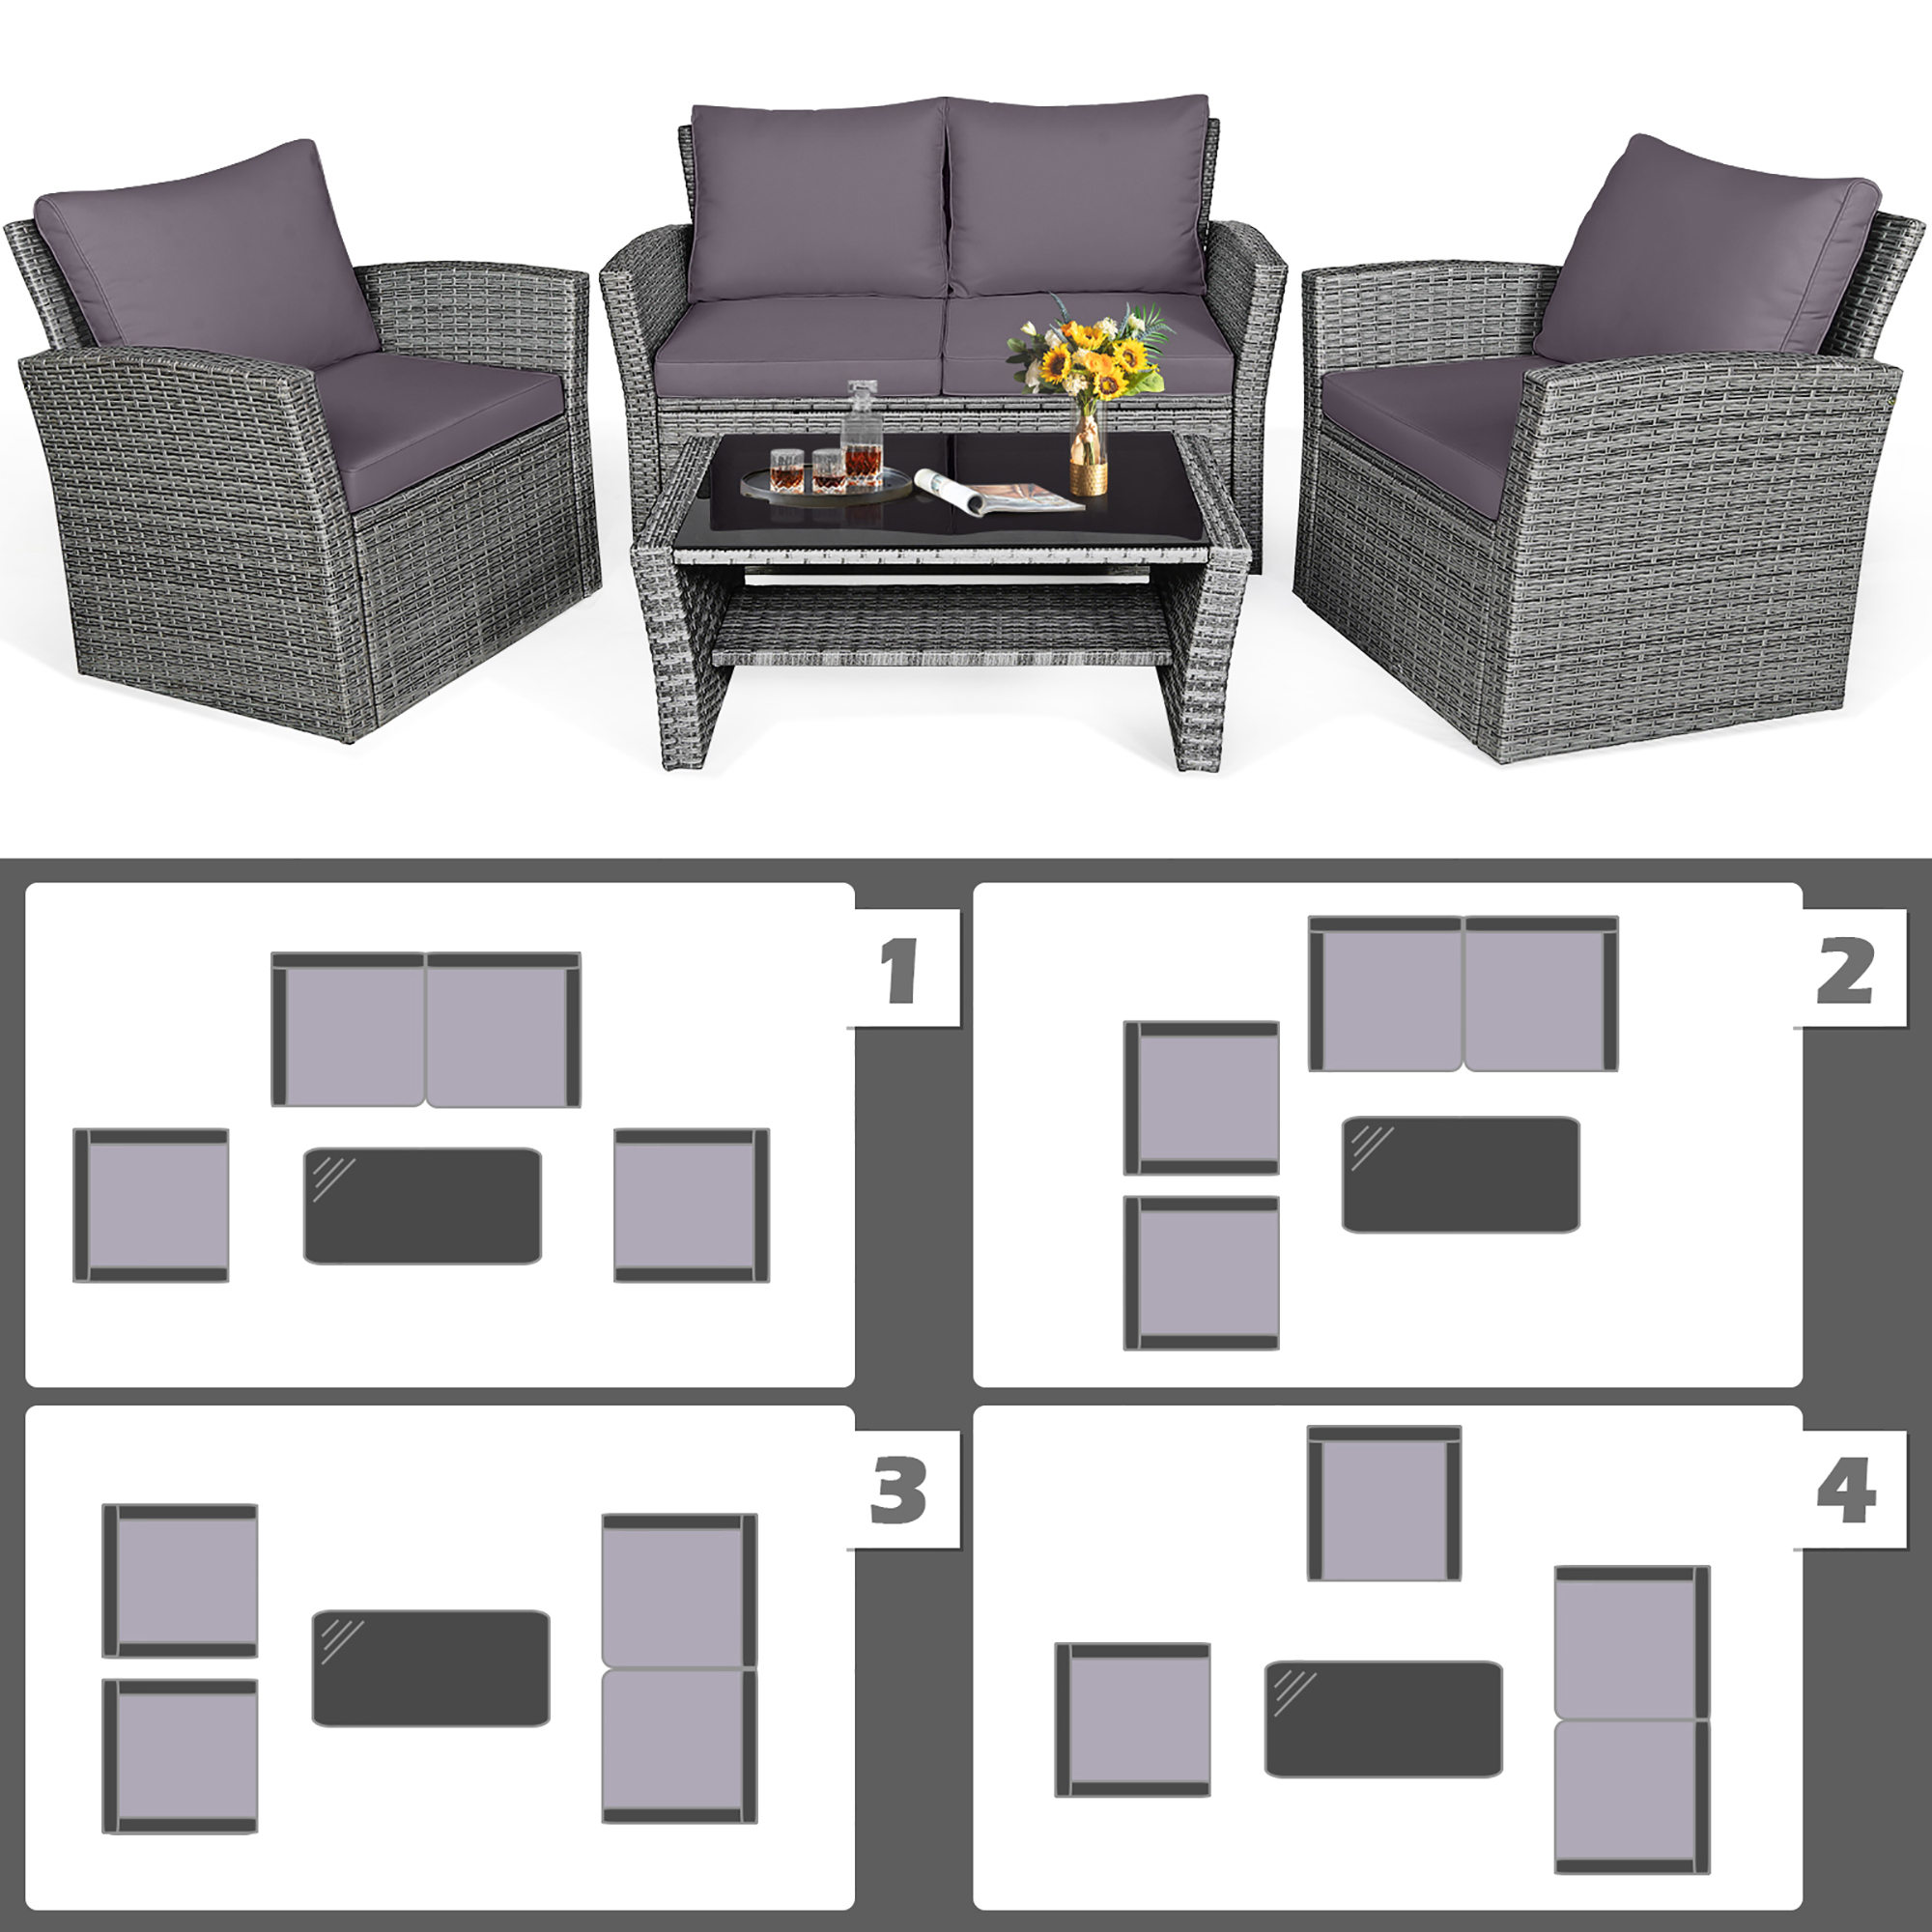 Gymax 4PCS Patio Rattan Conversation Set Outdoor Furniture Set w/ Grey Cushions - image 5 of 10